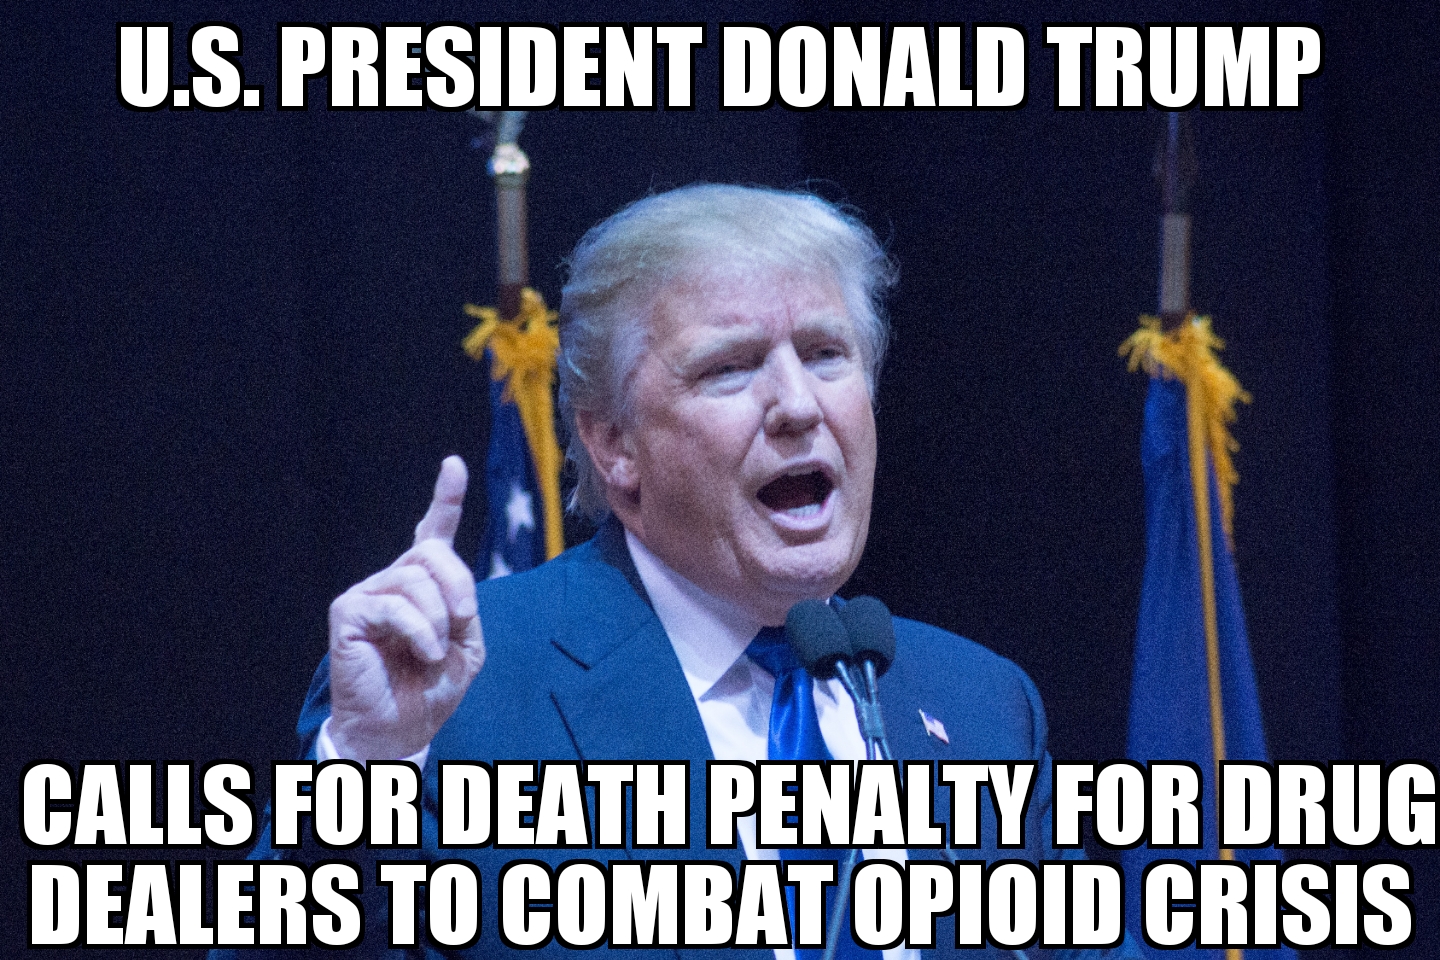 Trump calls for death penalty for drug dealers